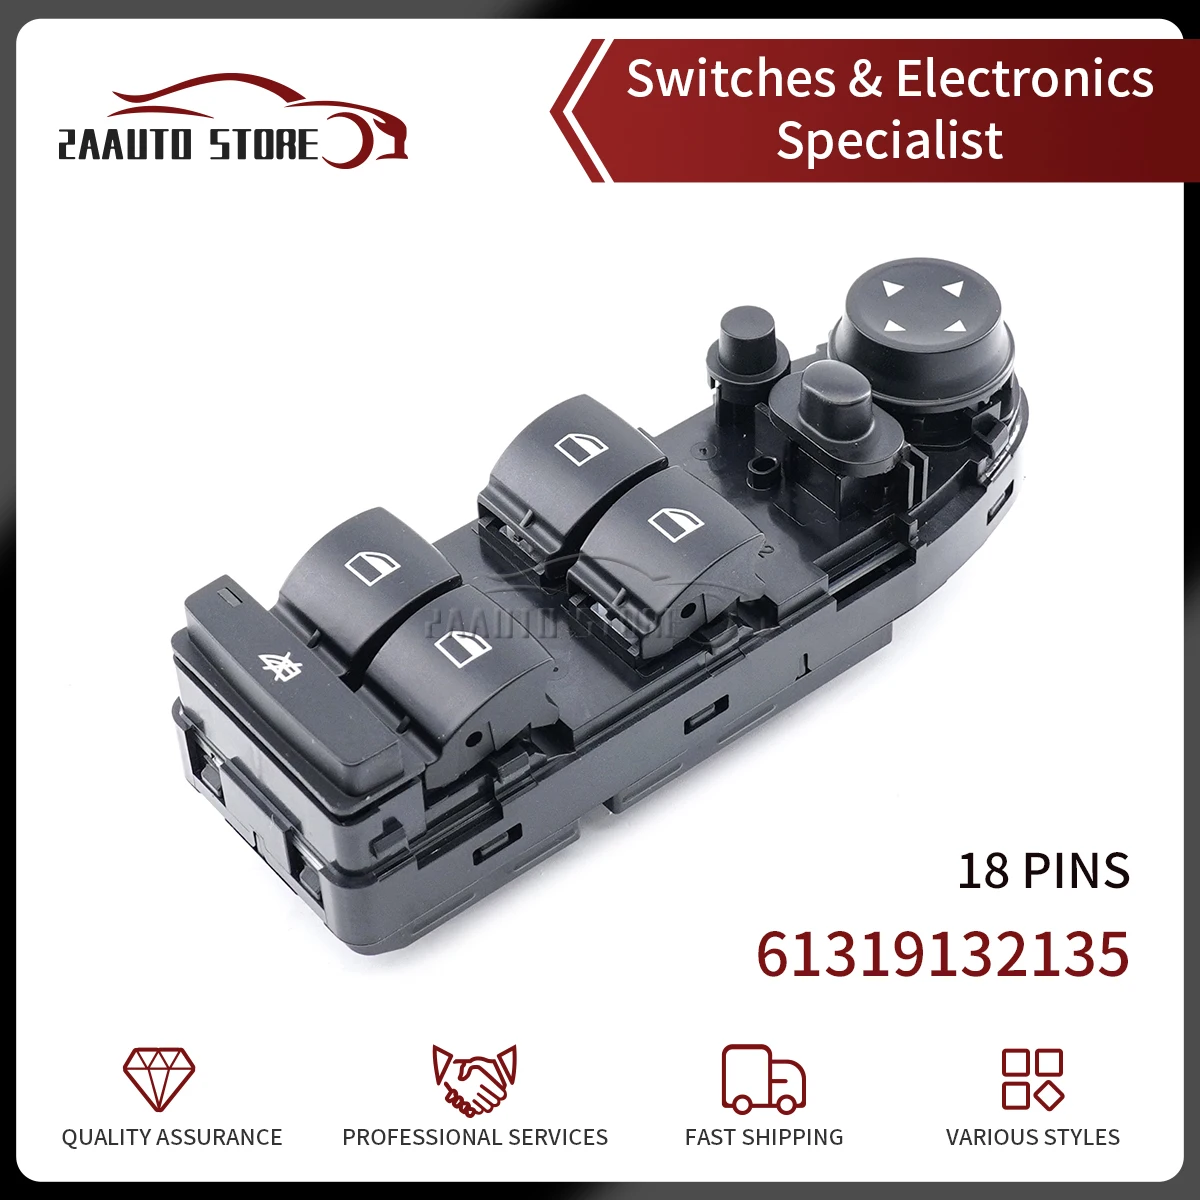 

Electric Power Car Window Switch Master Button Without Panel For BMW E90 E91 318i 320i 325i 330i 335i M3 61319217332 61319132135